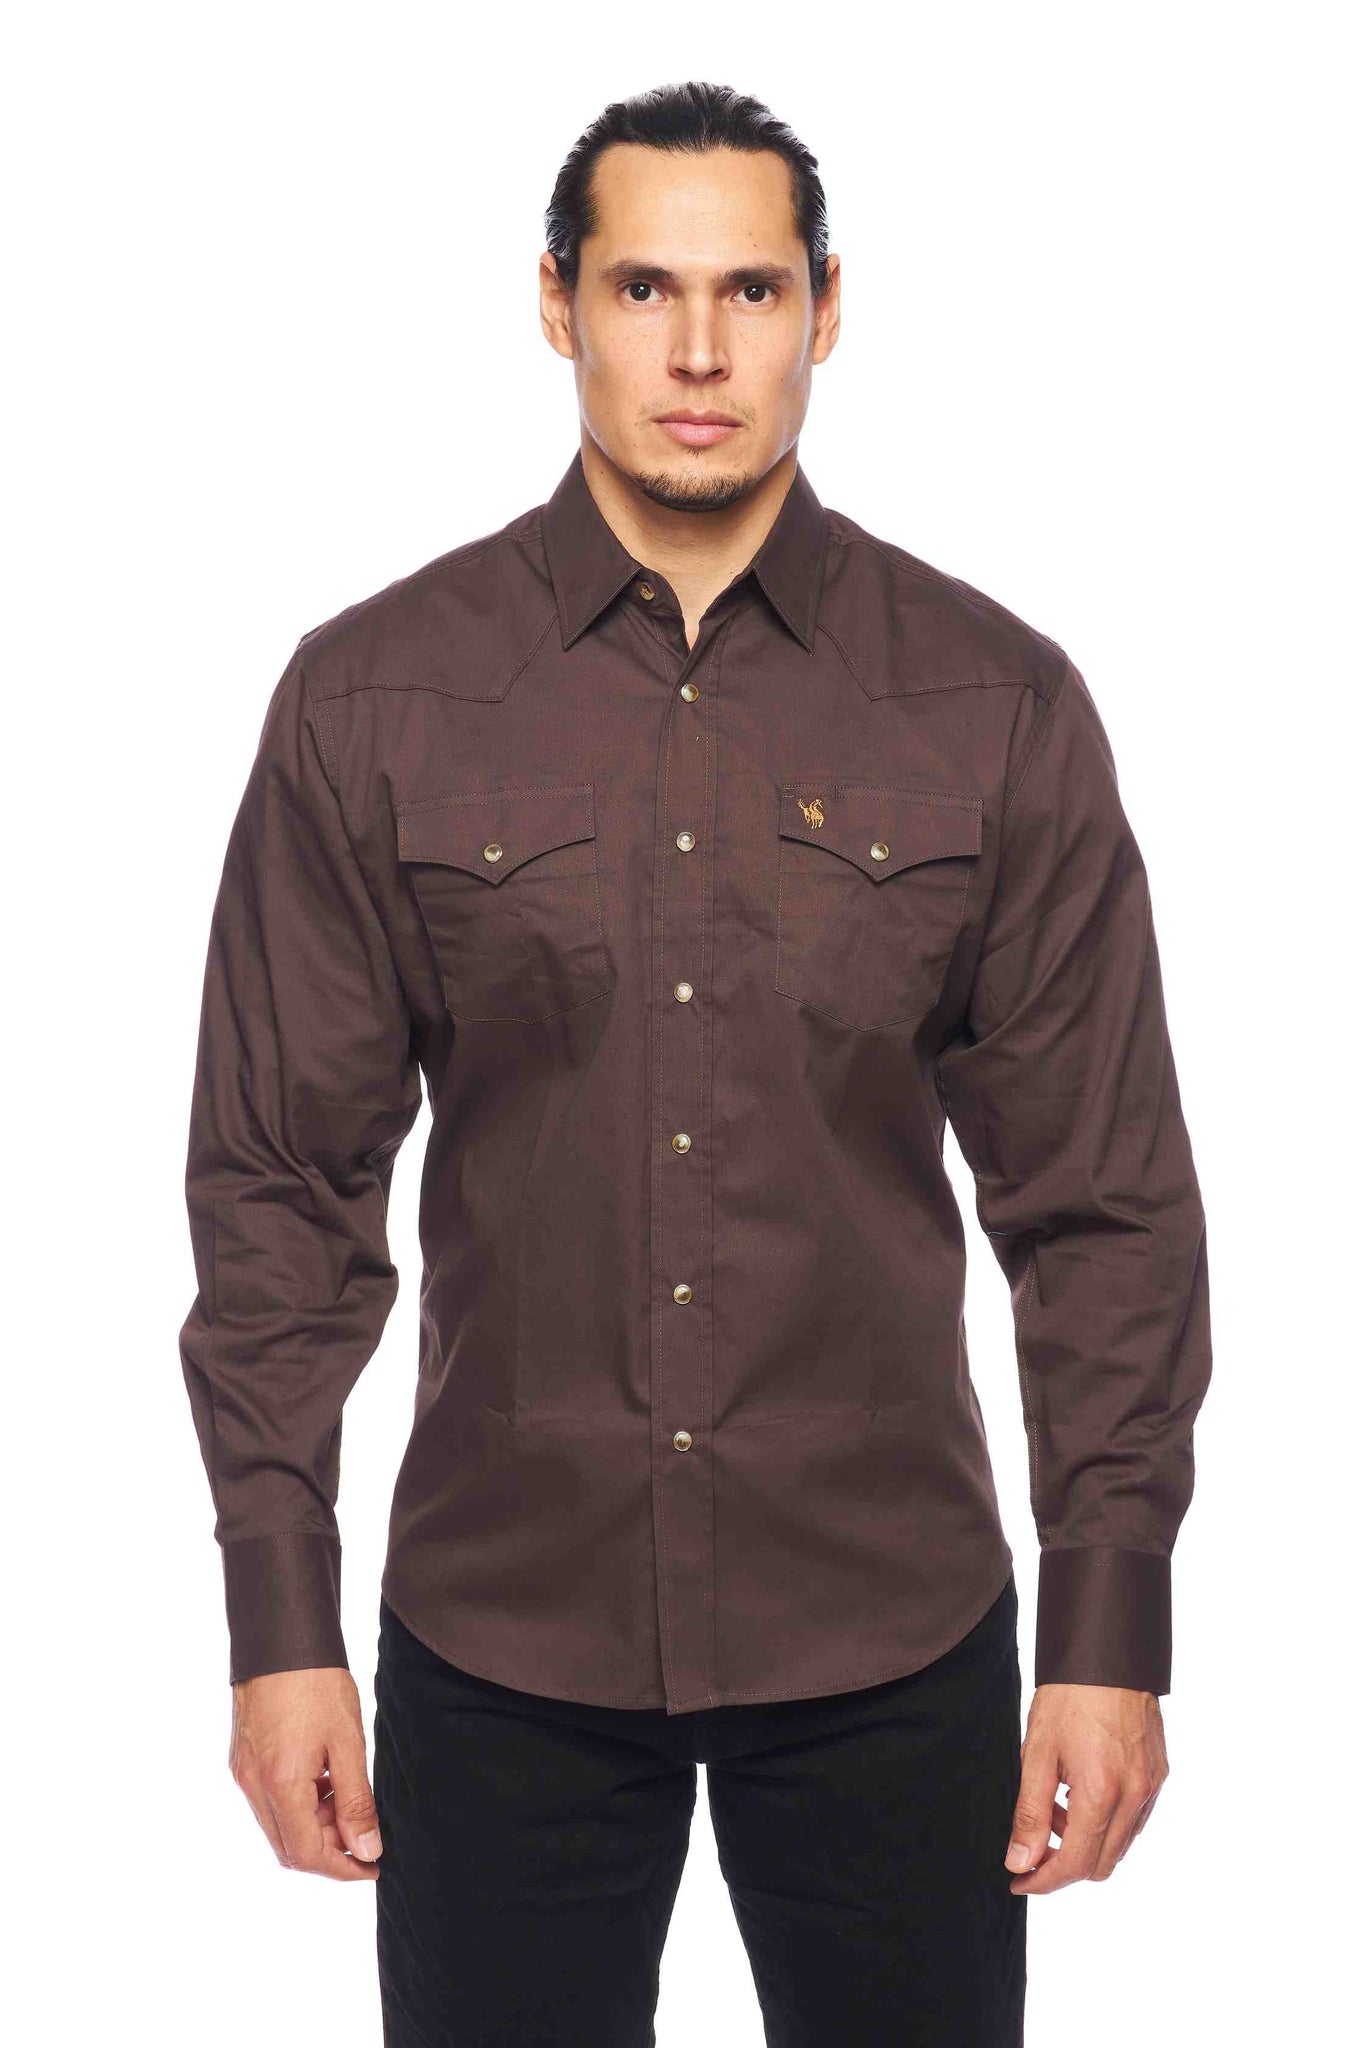 Western cotton twill shirt